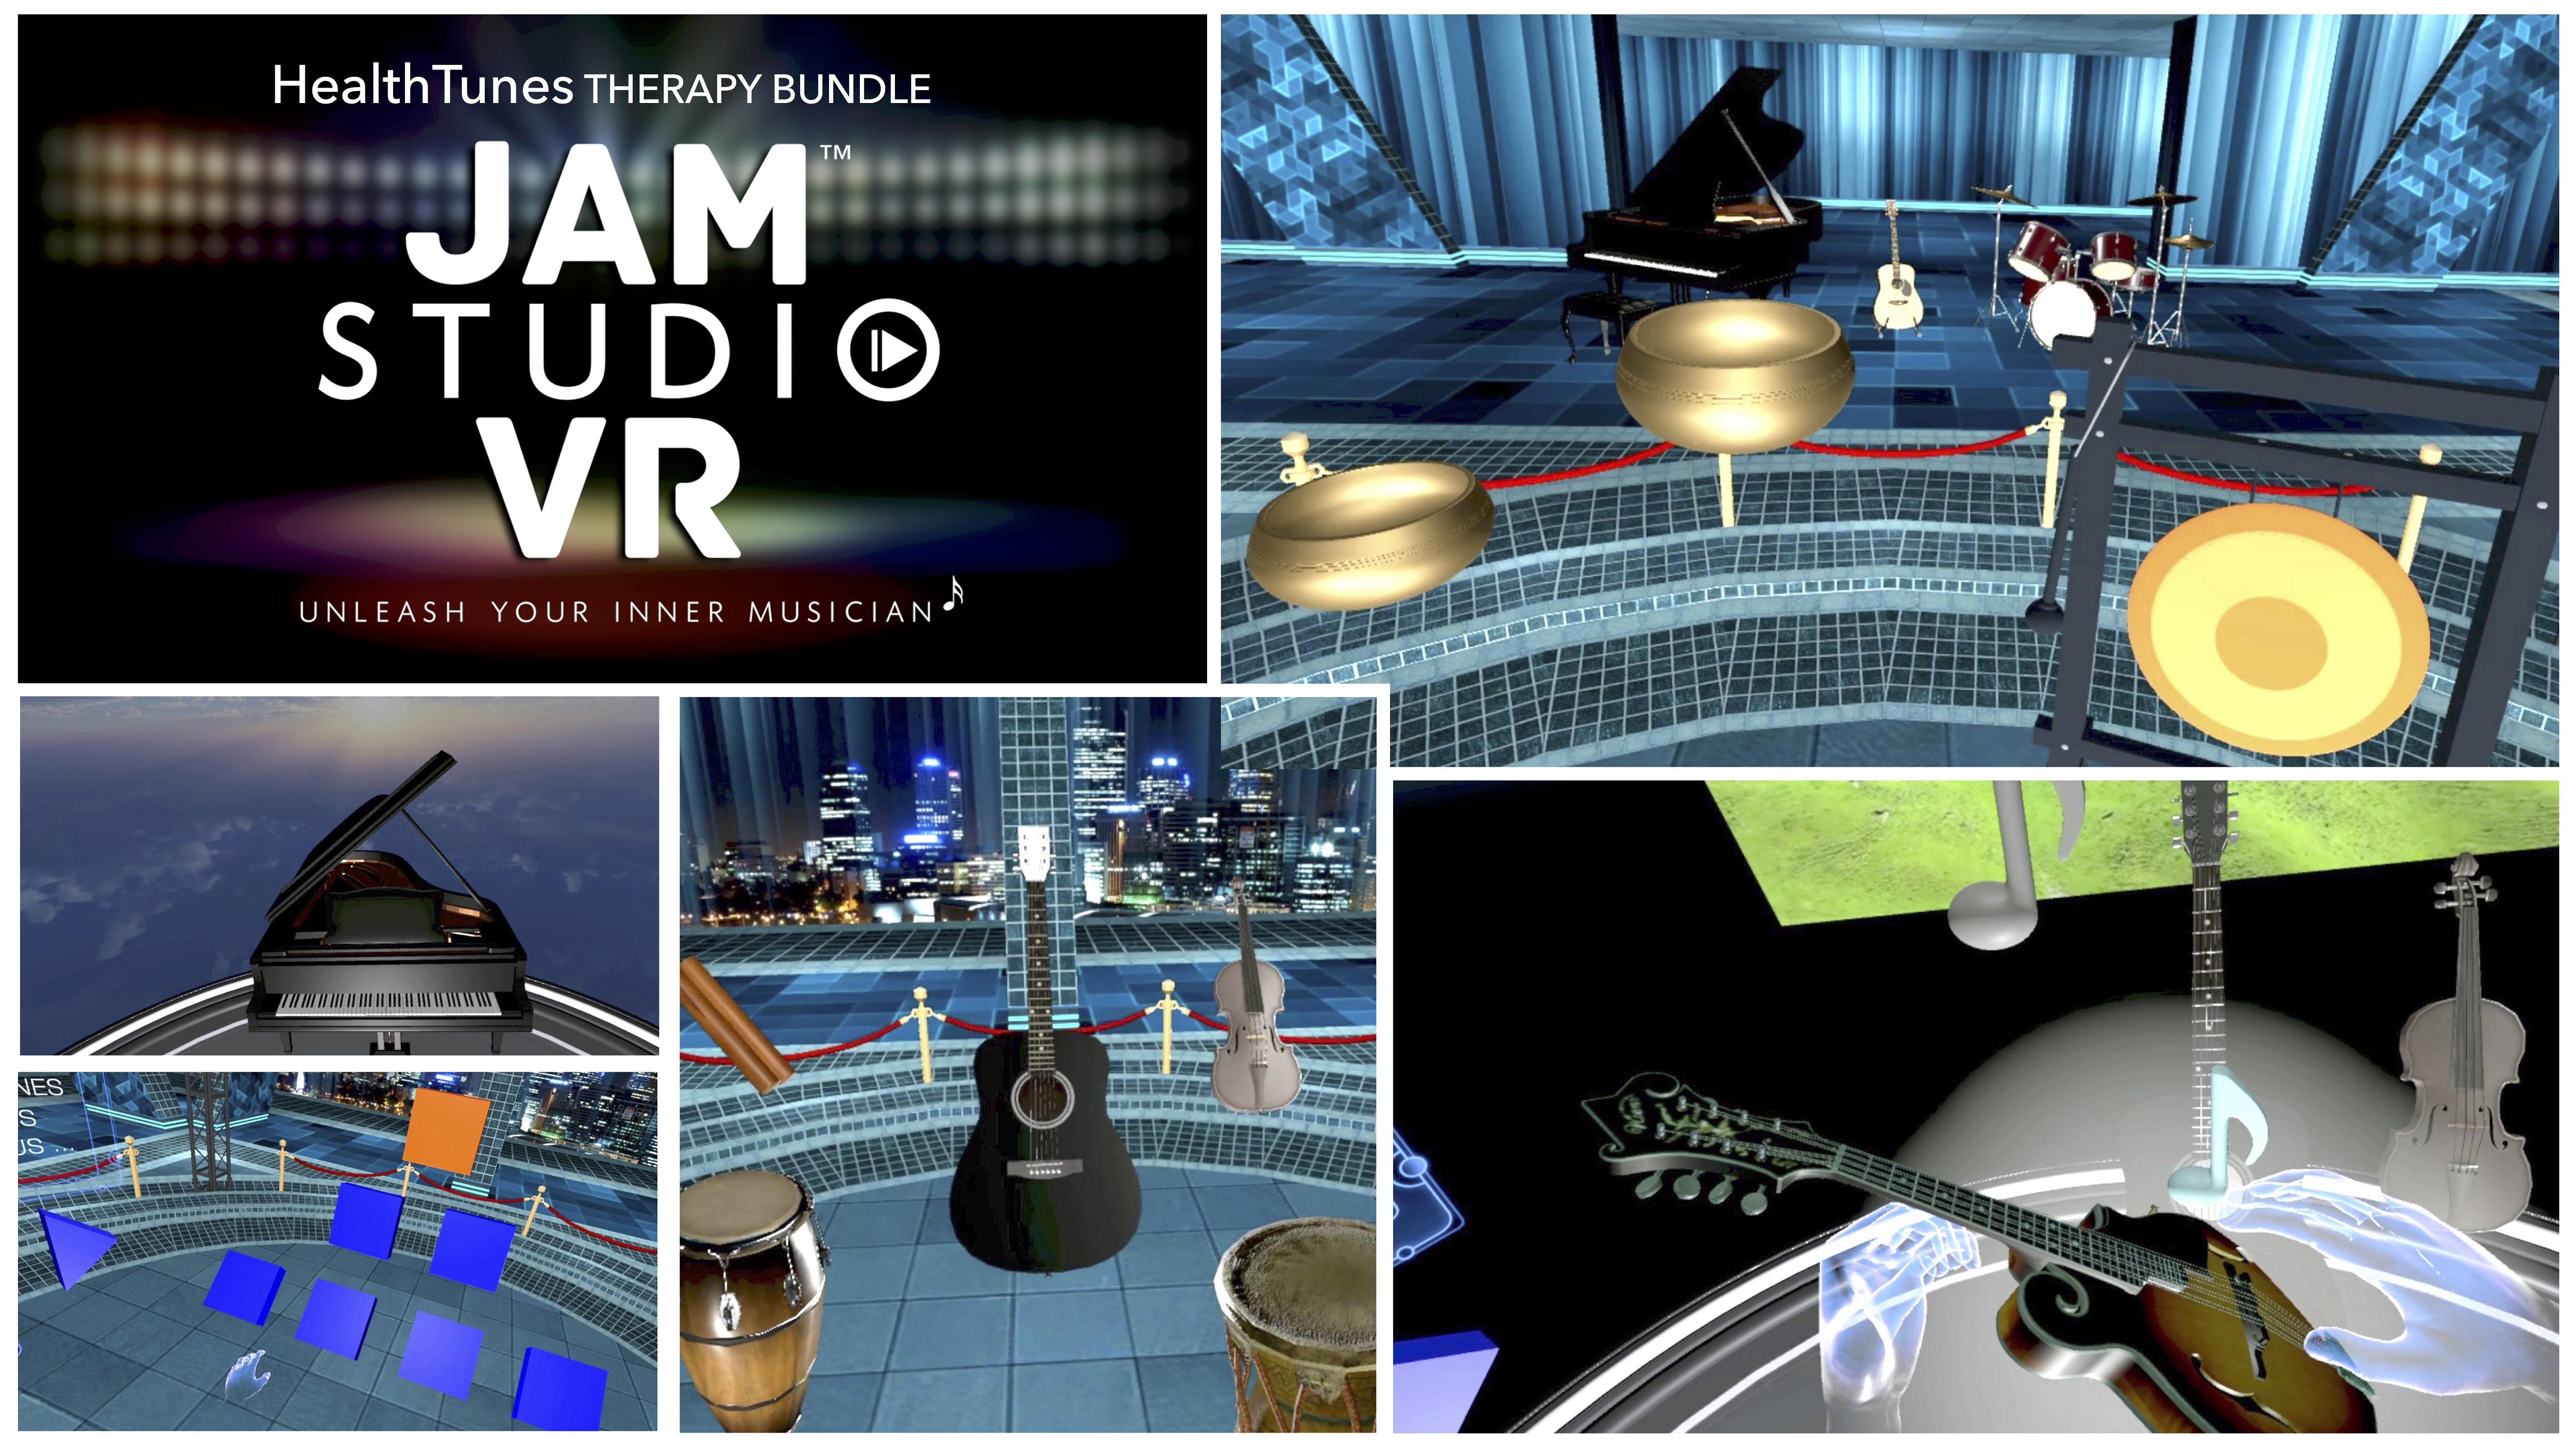 Jam Studio VR HealthTunes Therapy Bundle 